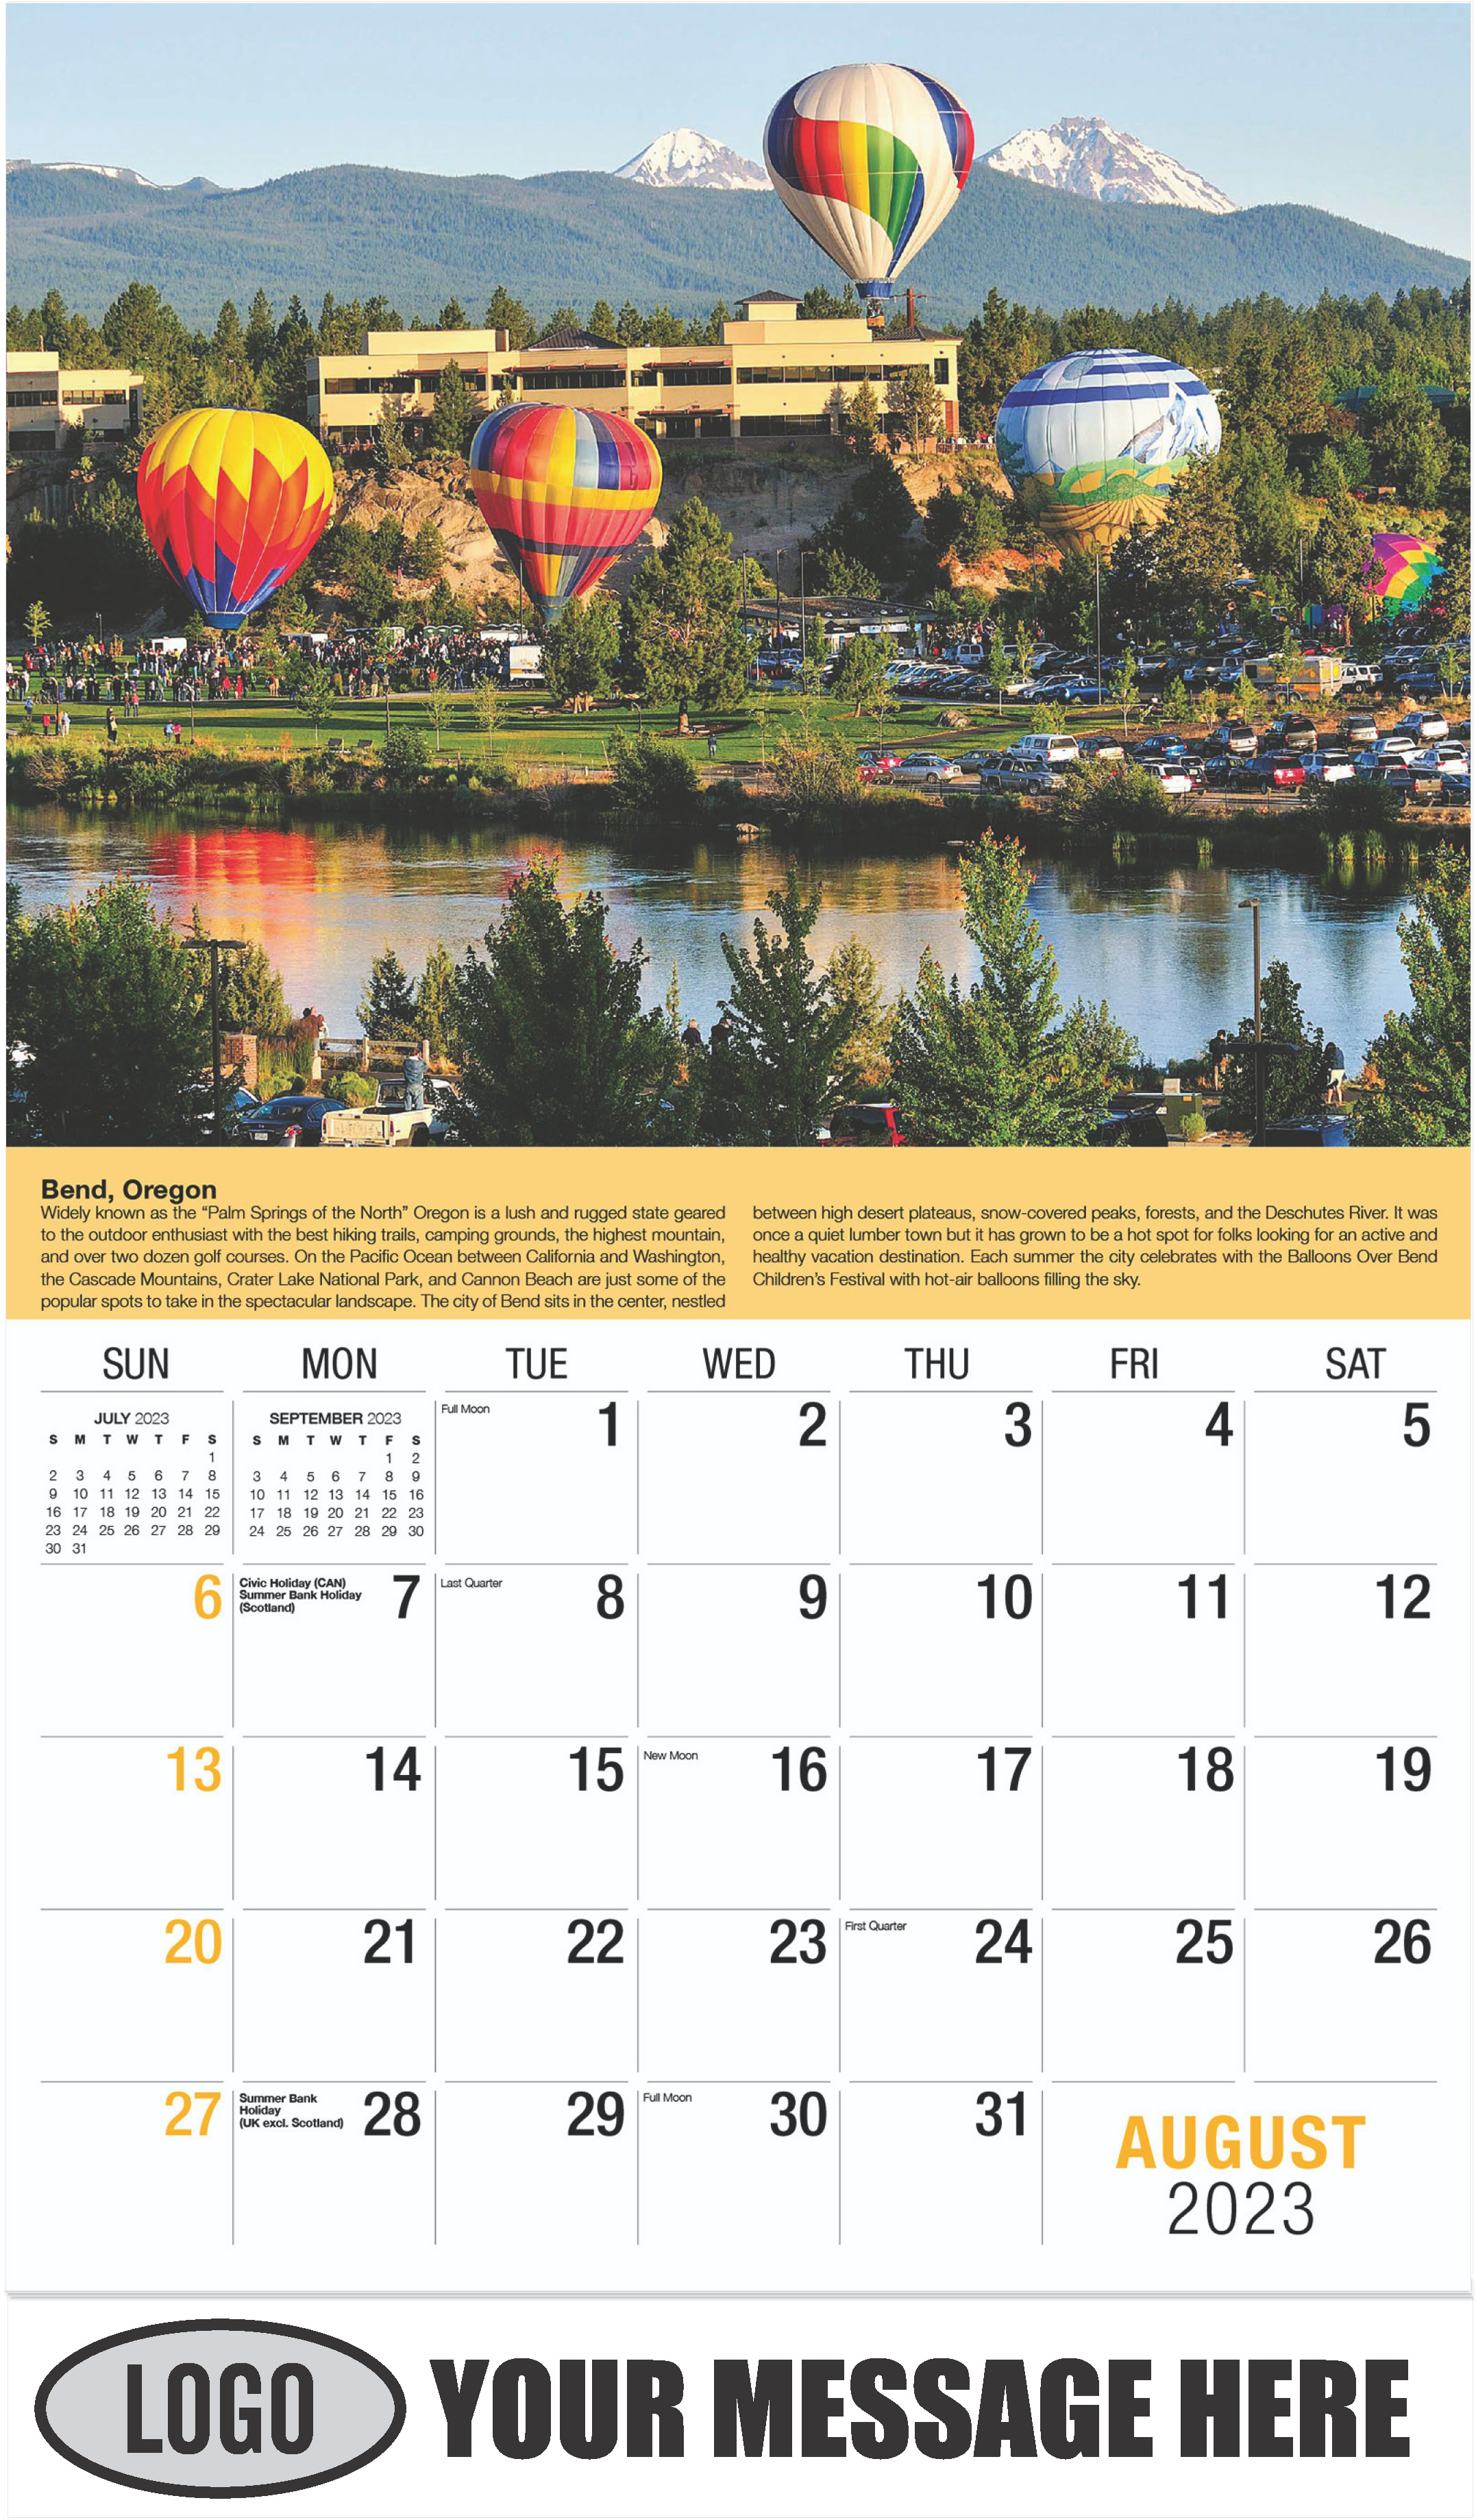 Bend, Oregon - August - World Travel 2023 Promotional Calendar